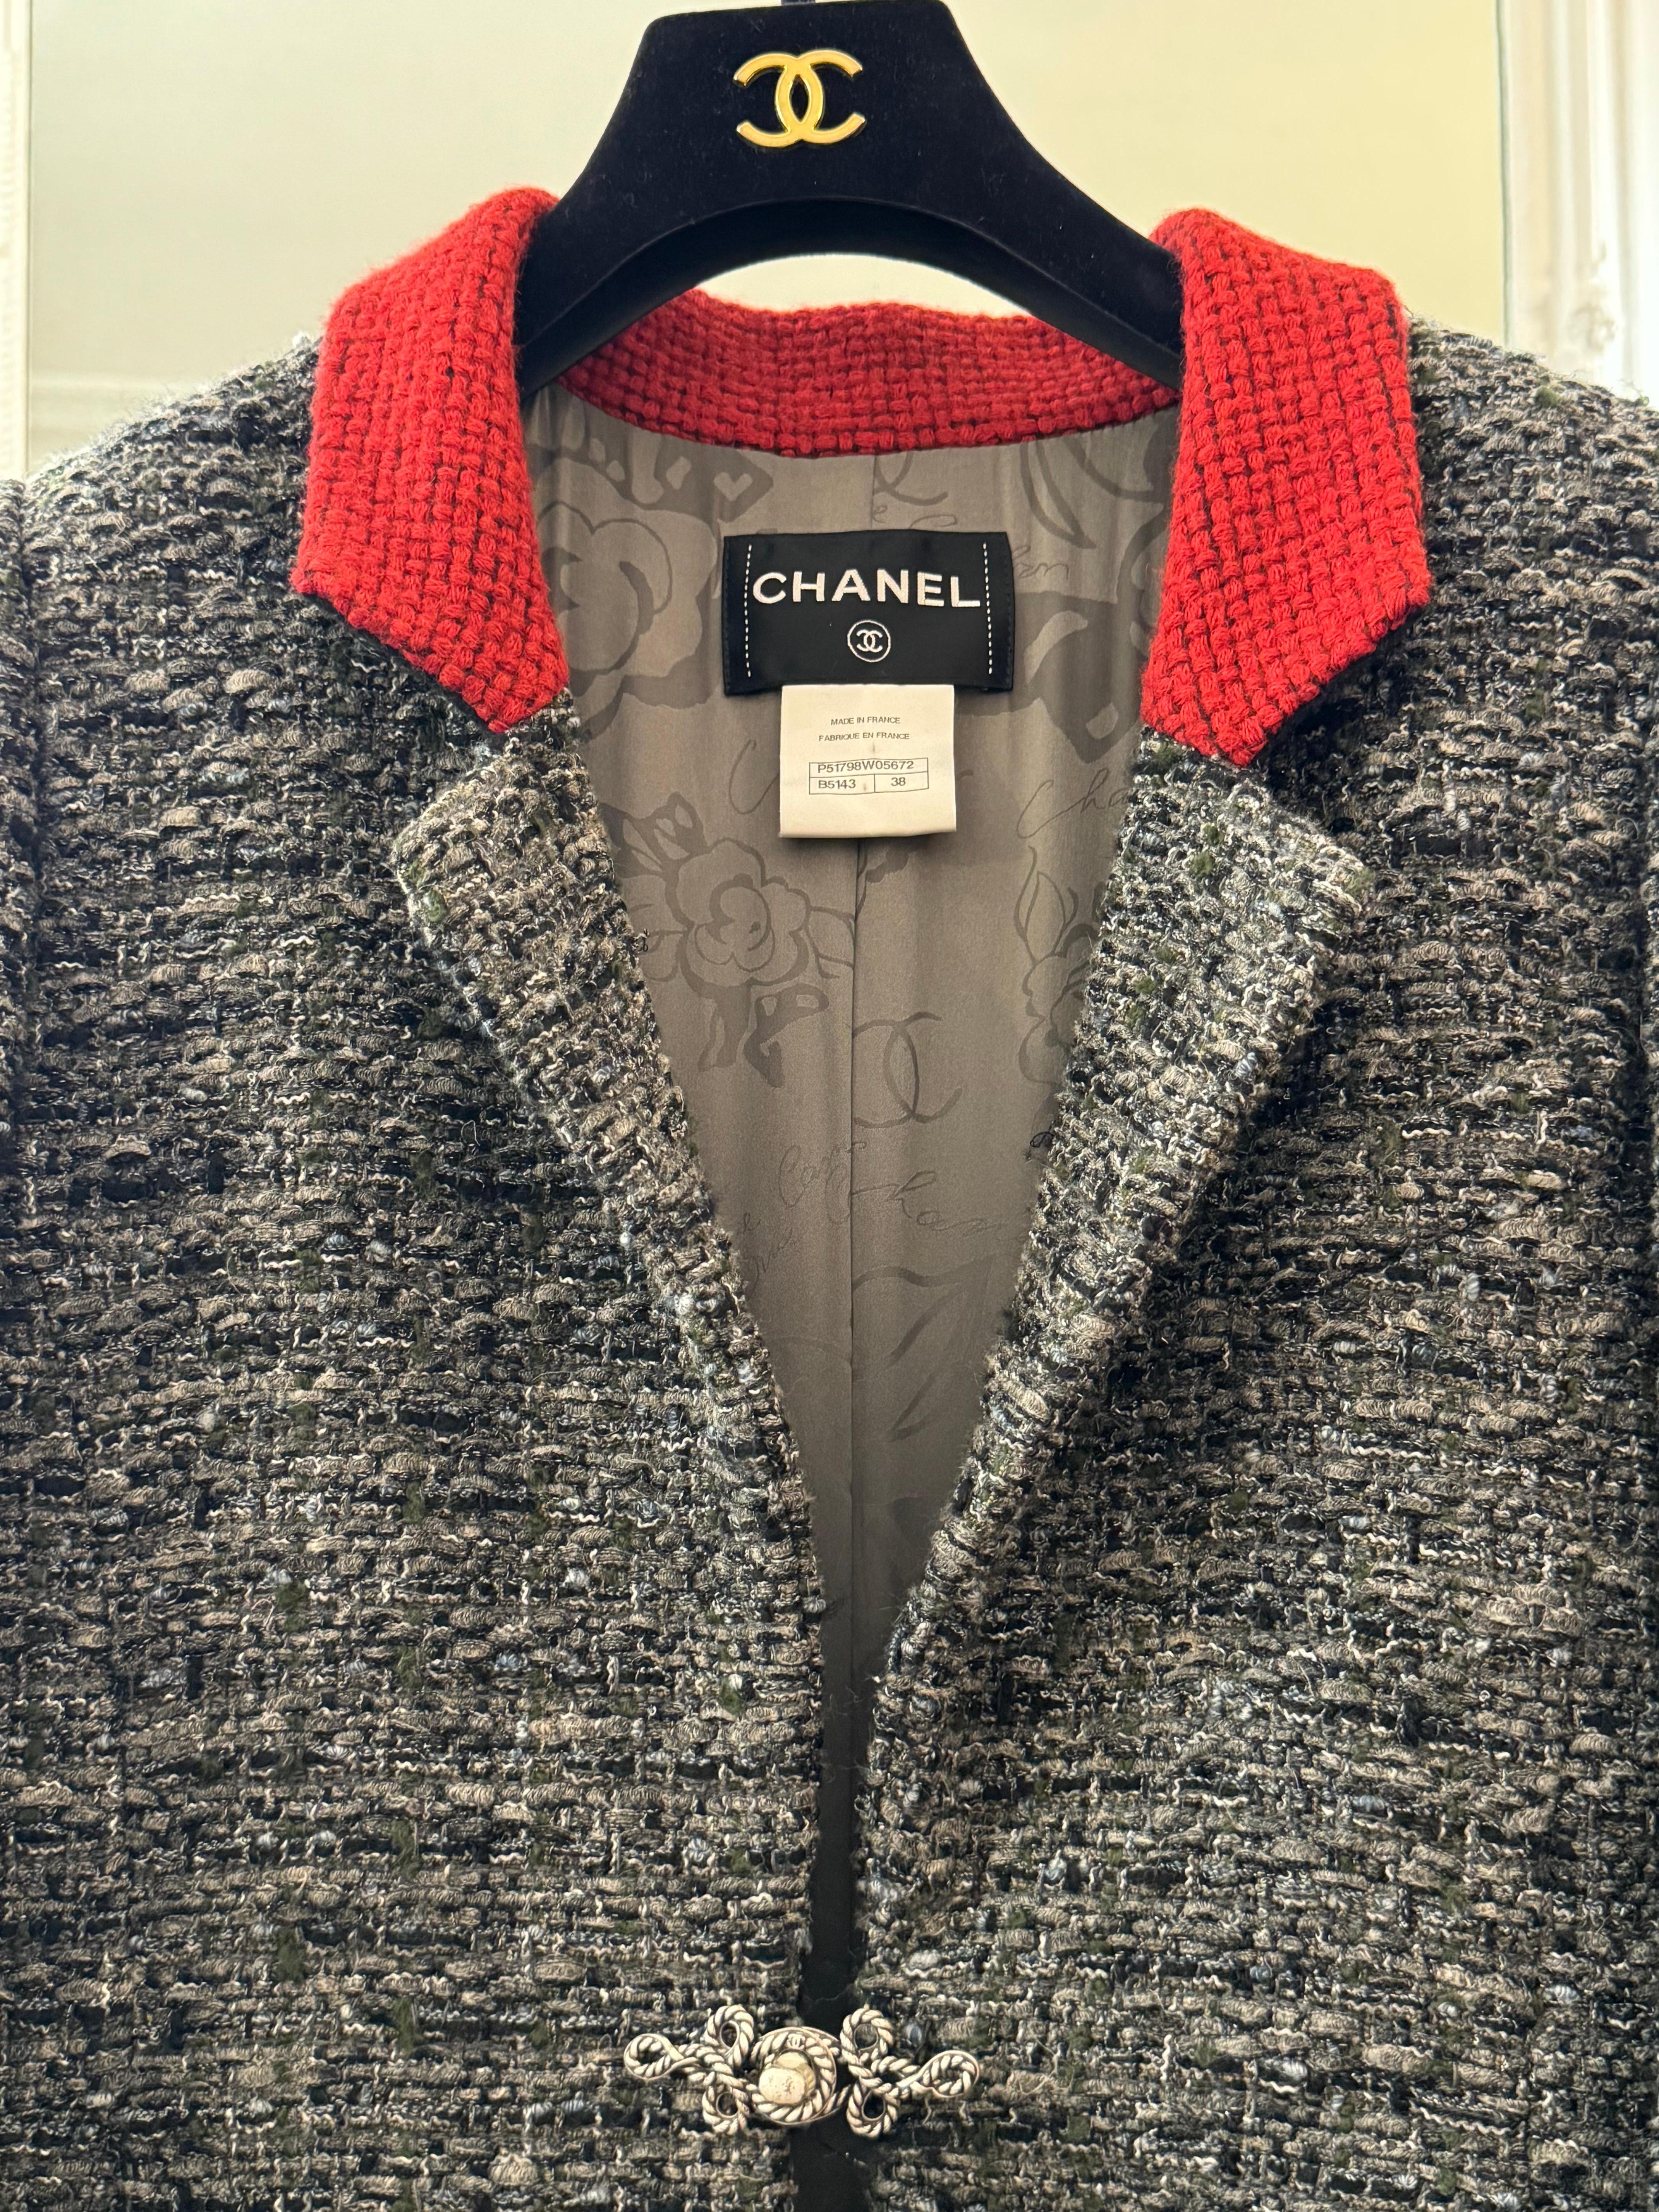 Chanel Paris Salzburg 2015 runway coat  In Excellent Condition For Sale In PARIS, FR